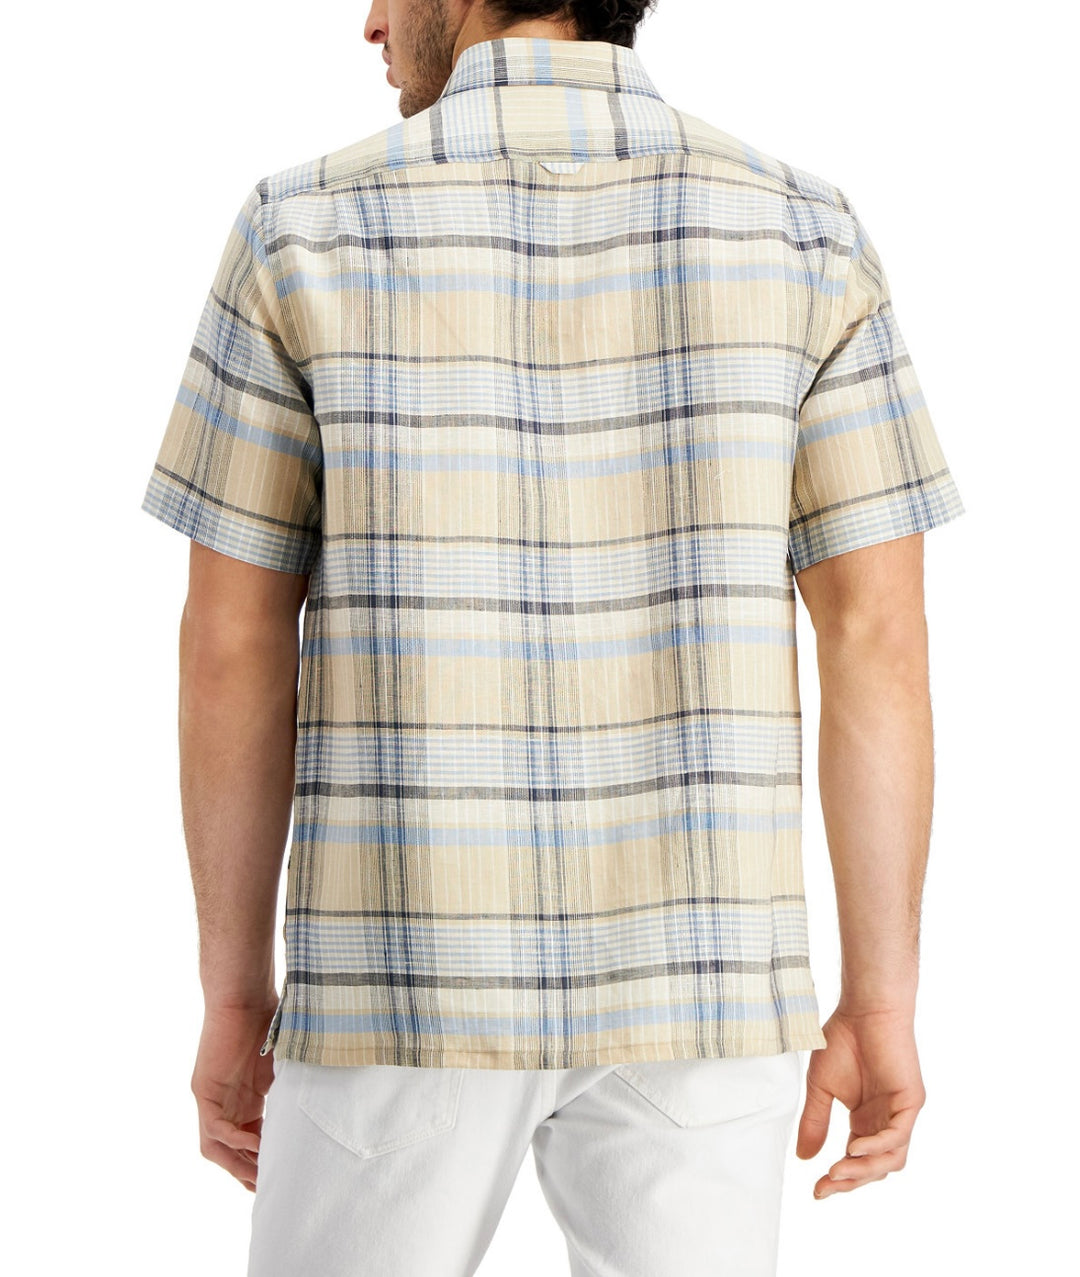 Club Room Men's Regular-Fit Plaid Linen Shirt Khaki Combo Size M